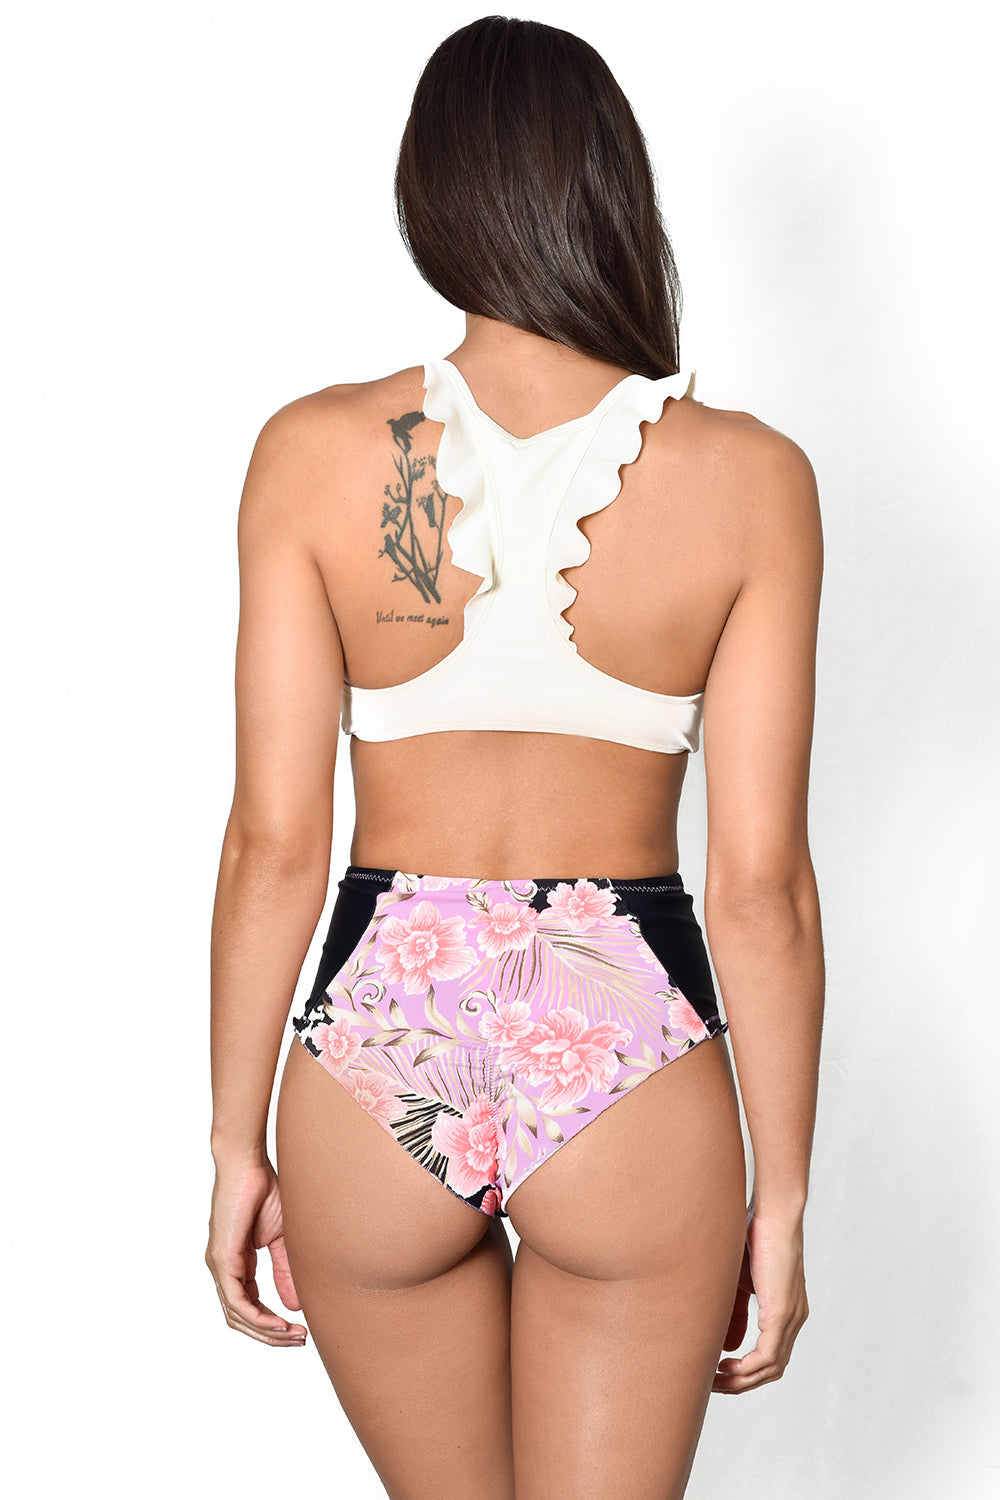 PEARL IVORY Ruffle Bikini Top by Maya Swimwear